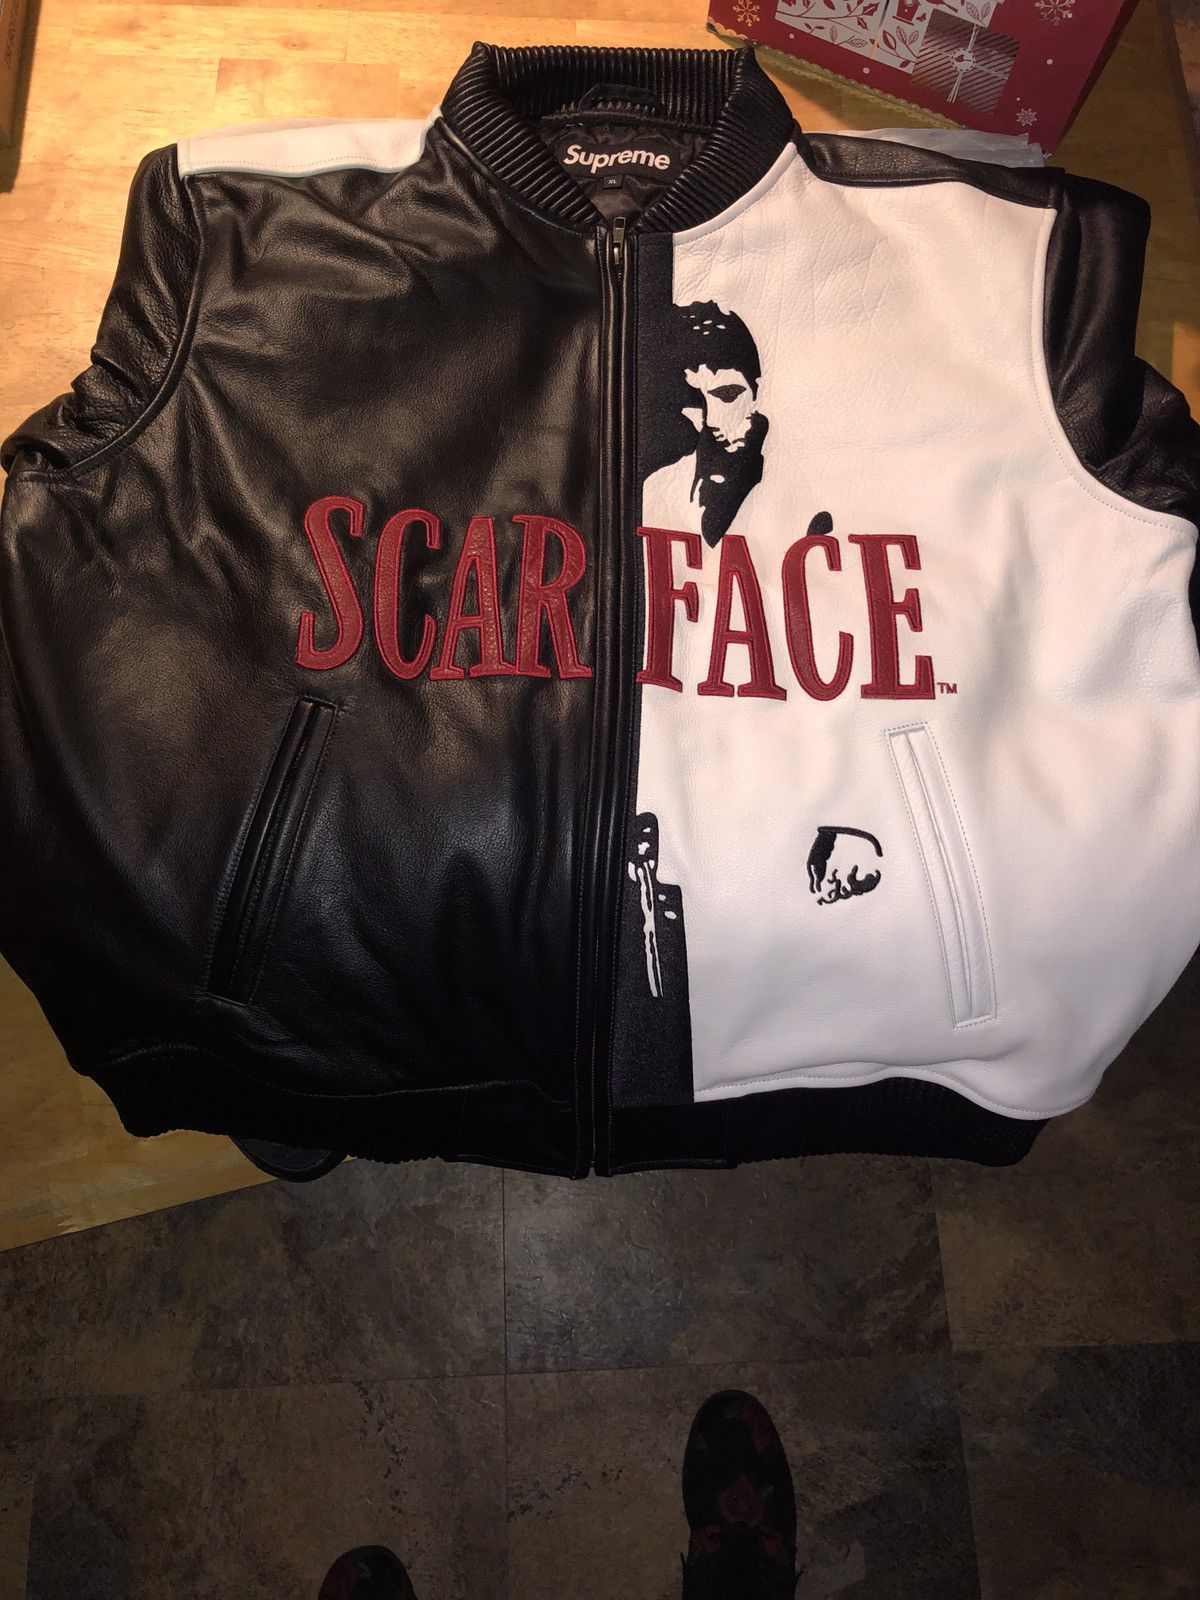 Supreme Scarface Jacket | Grailed